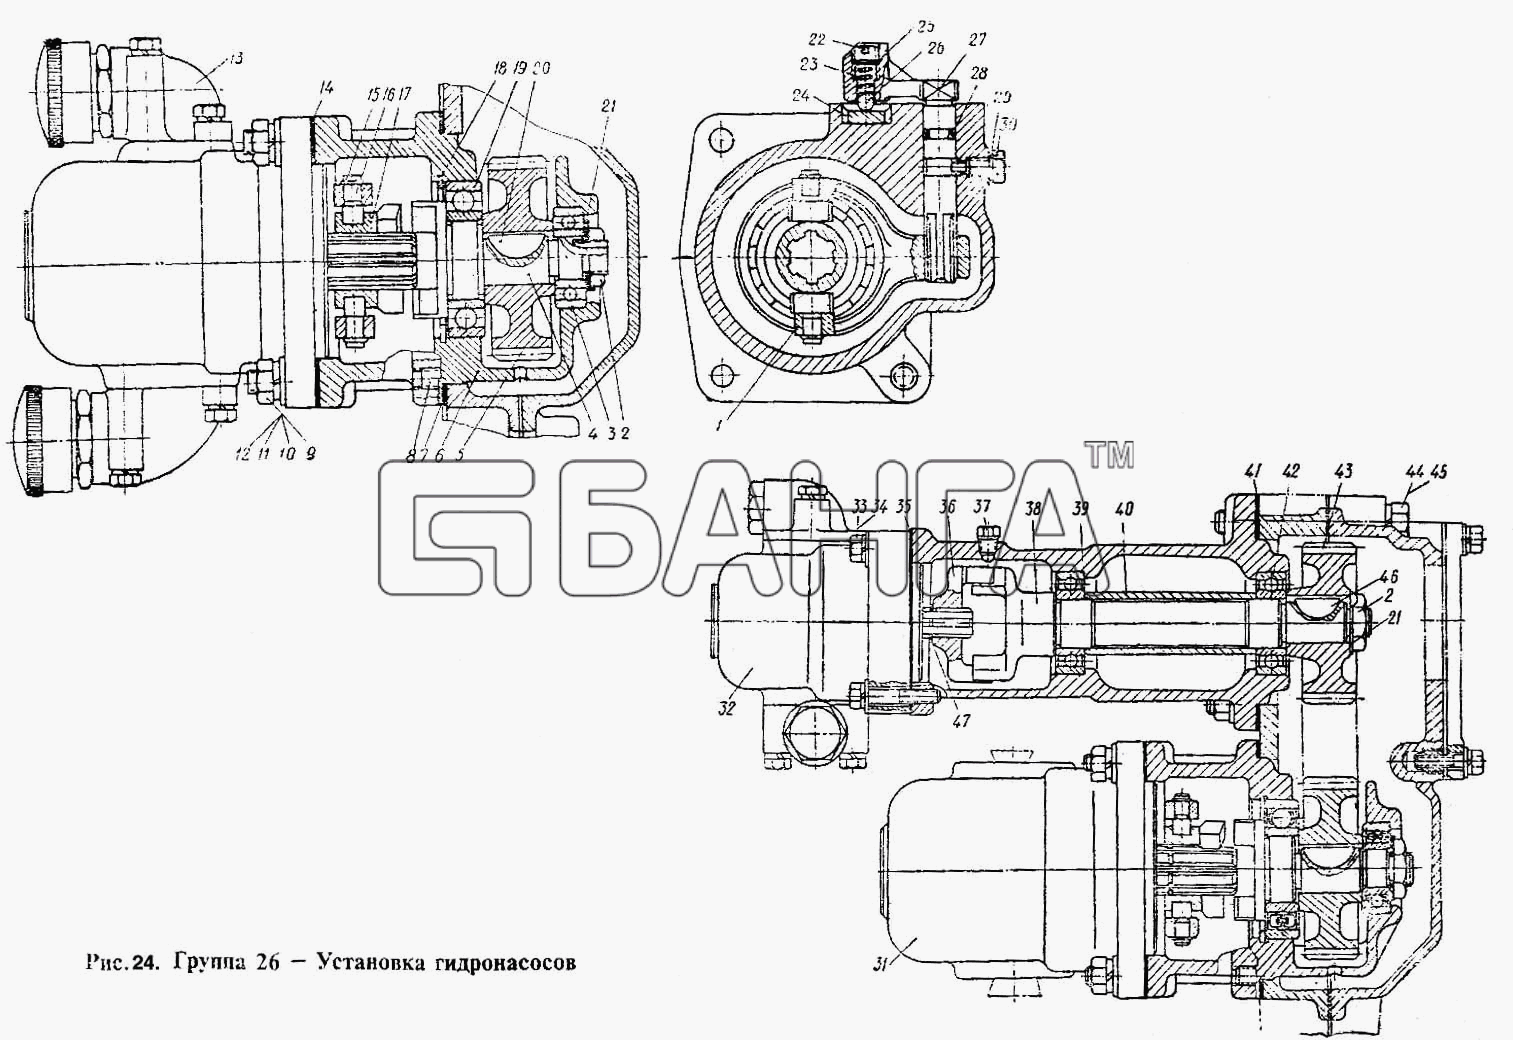 СМД 14 (1998 г. Минск) Схема Установка гидронасосов-37 banga.ua